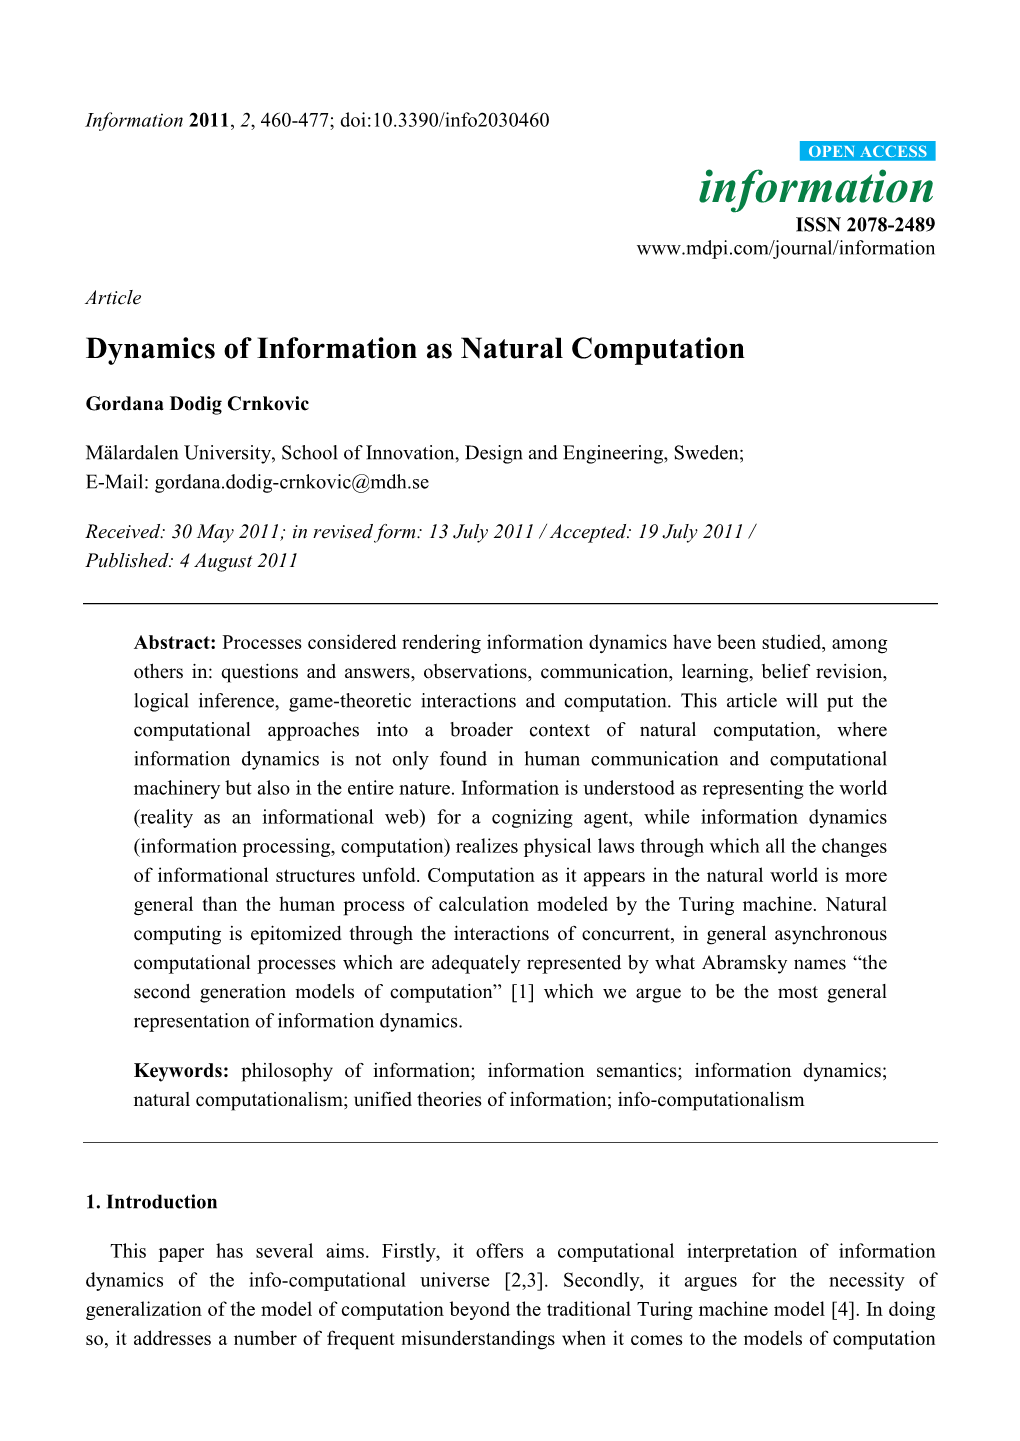 Dynamics of Information As Natural Computation